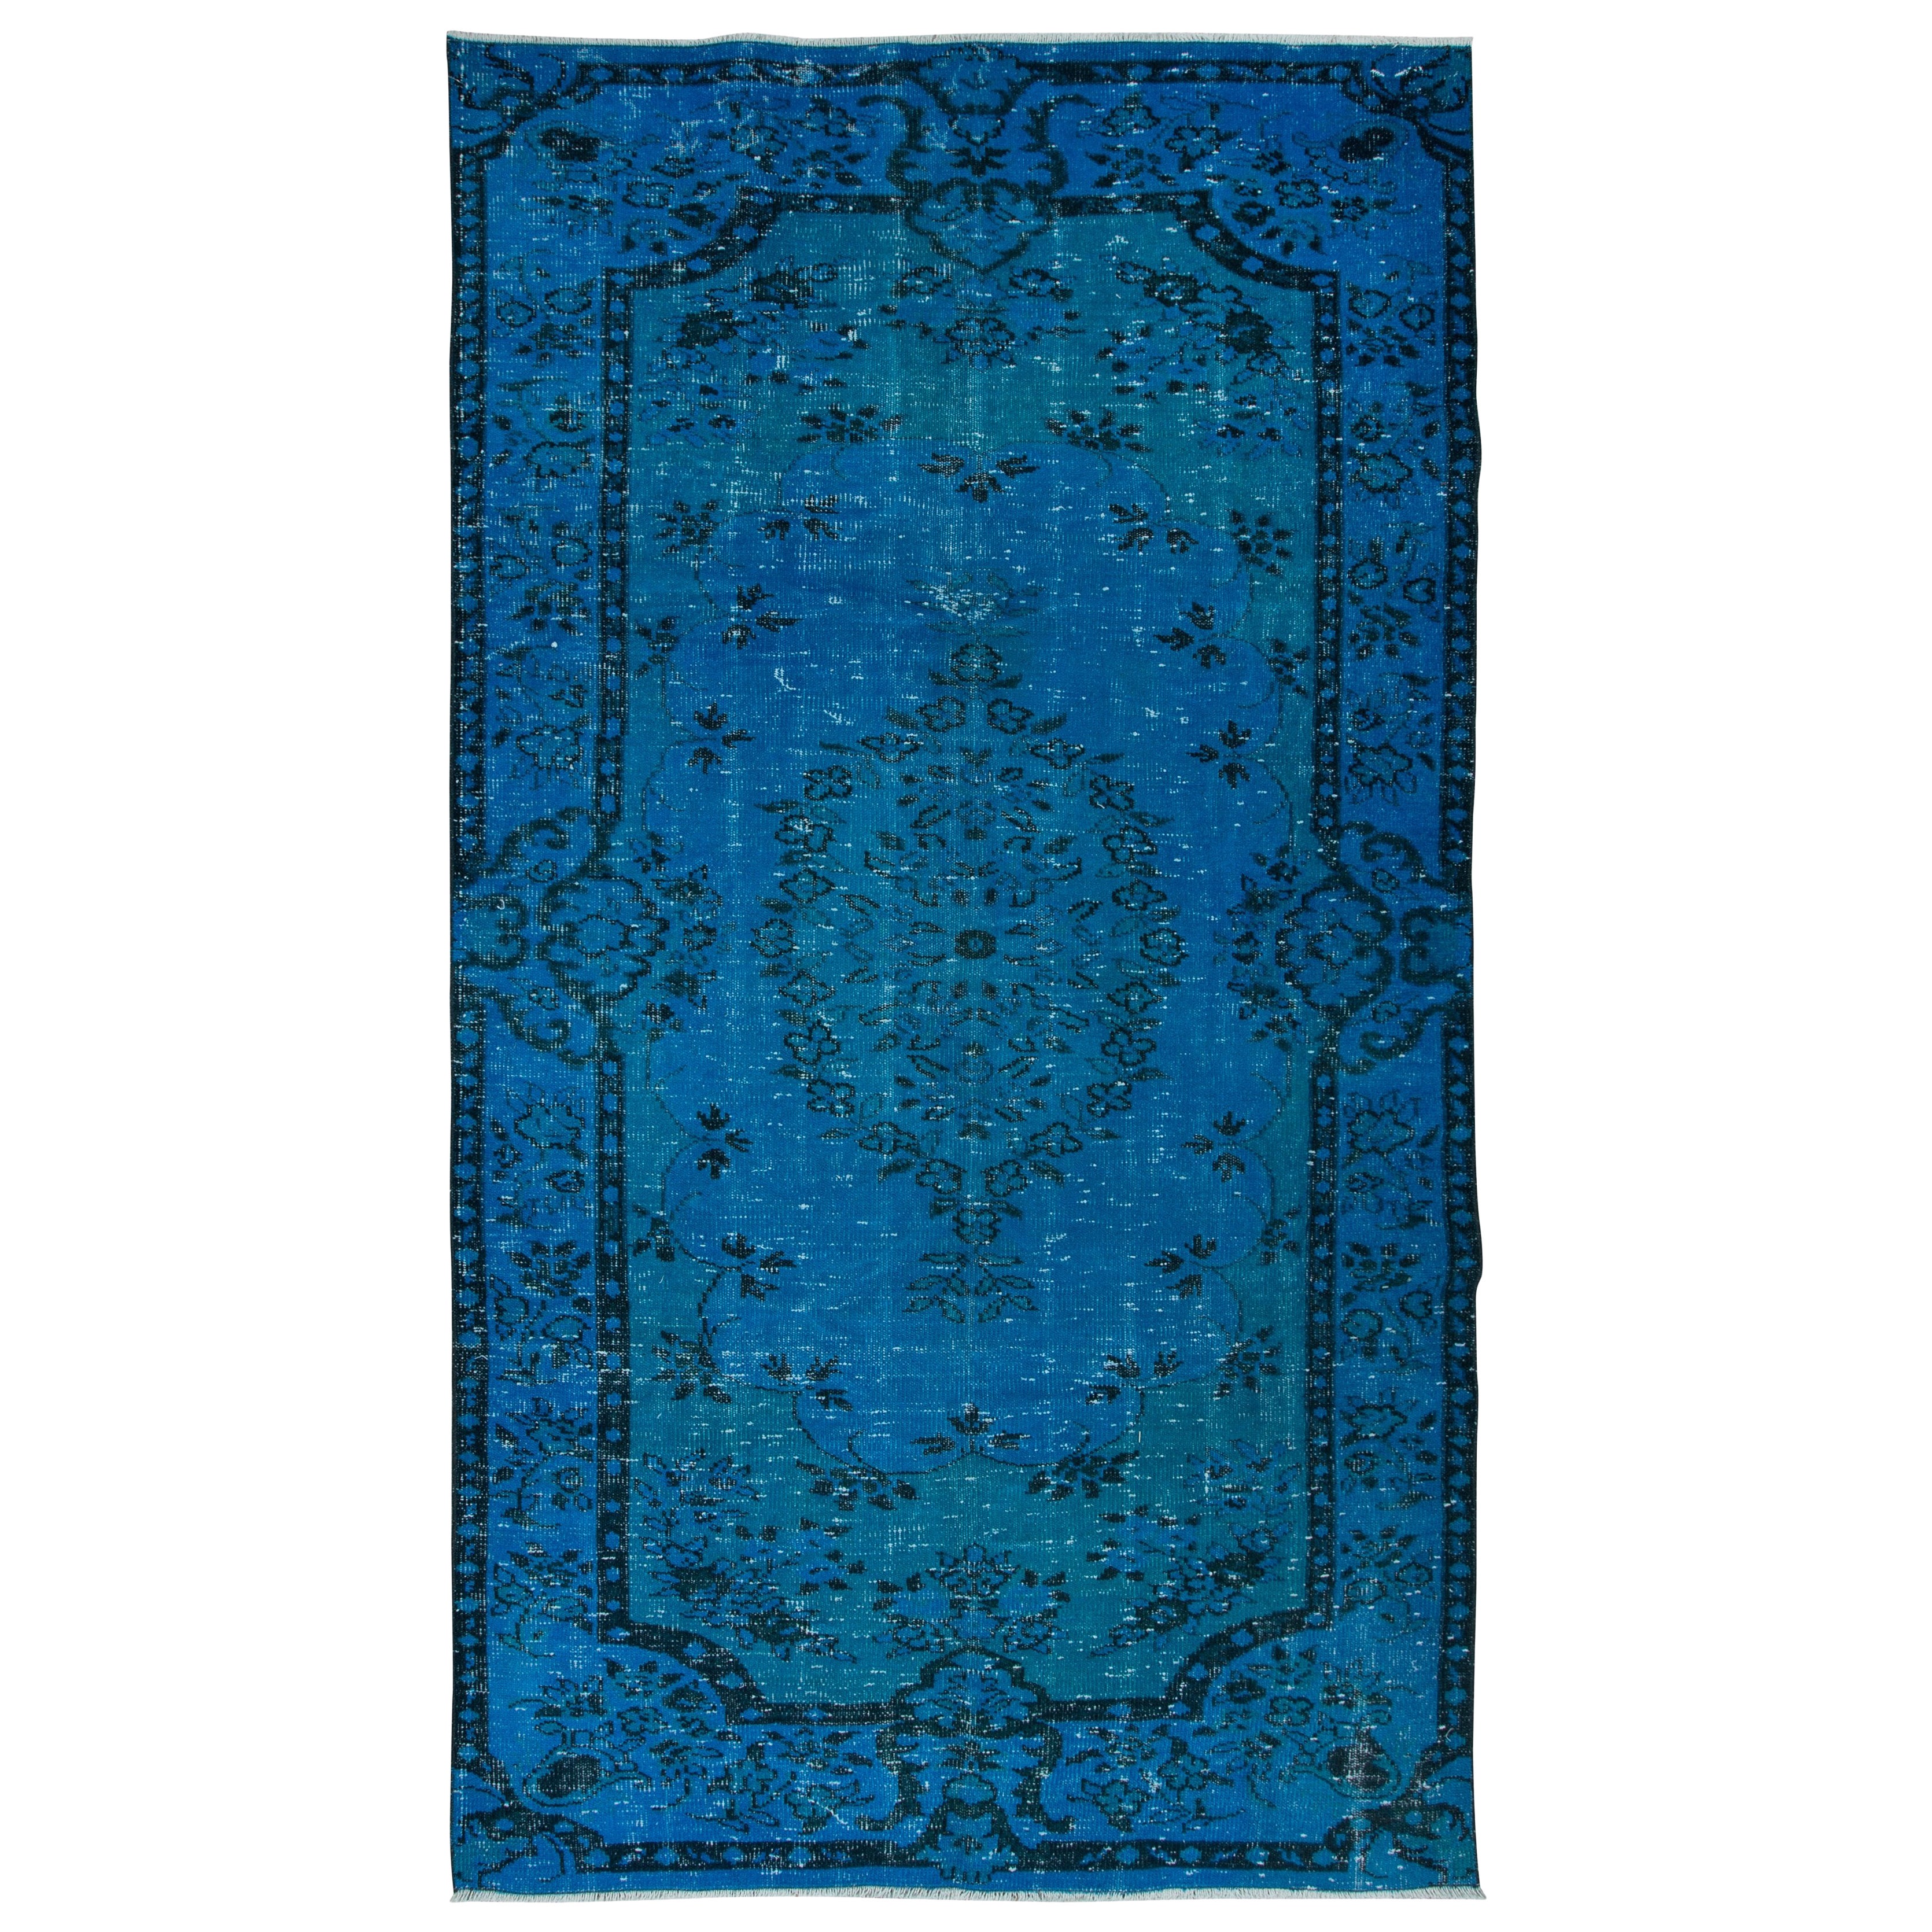 5.3x9.2 Ft Blue Handmade Turkish Rug for Living Room, Bedroom, Dining Room For Sale